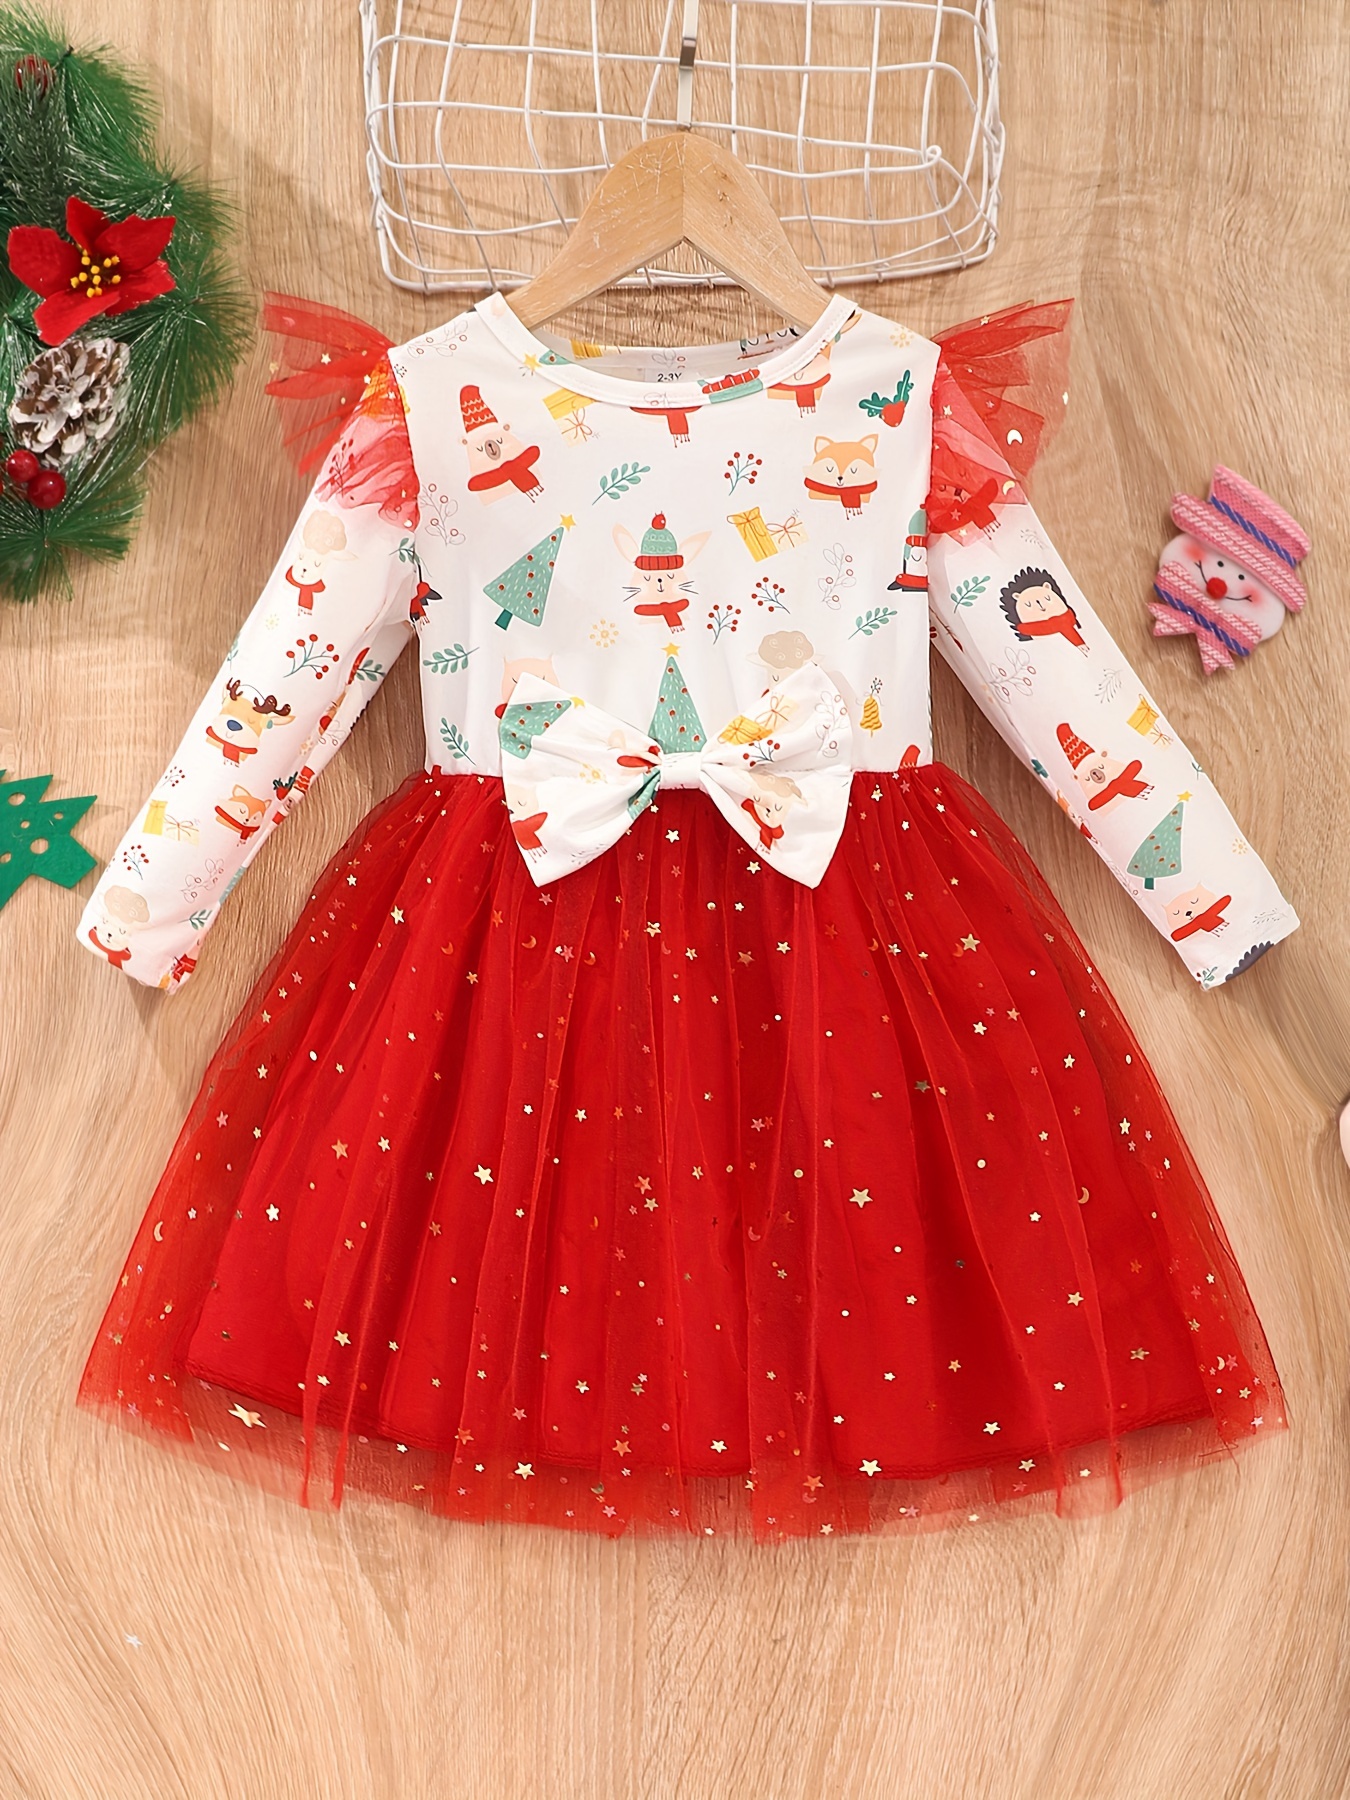 Robe de Noël bébé, tenue de Noël bébé fille, tenue de père Noël bébé,  photographie de Noël bébé, tenue de Noël fille accessoires de Noël